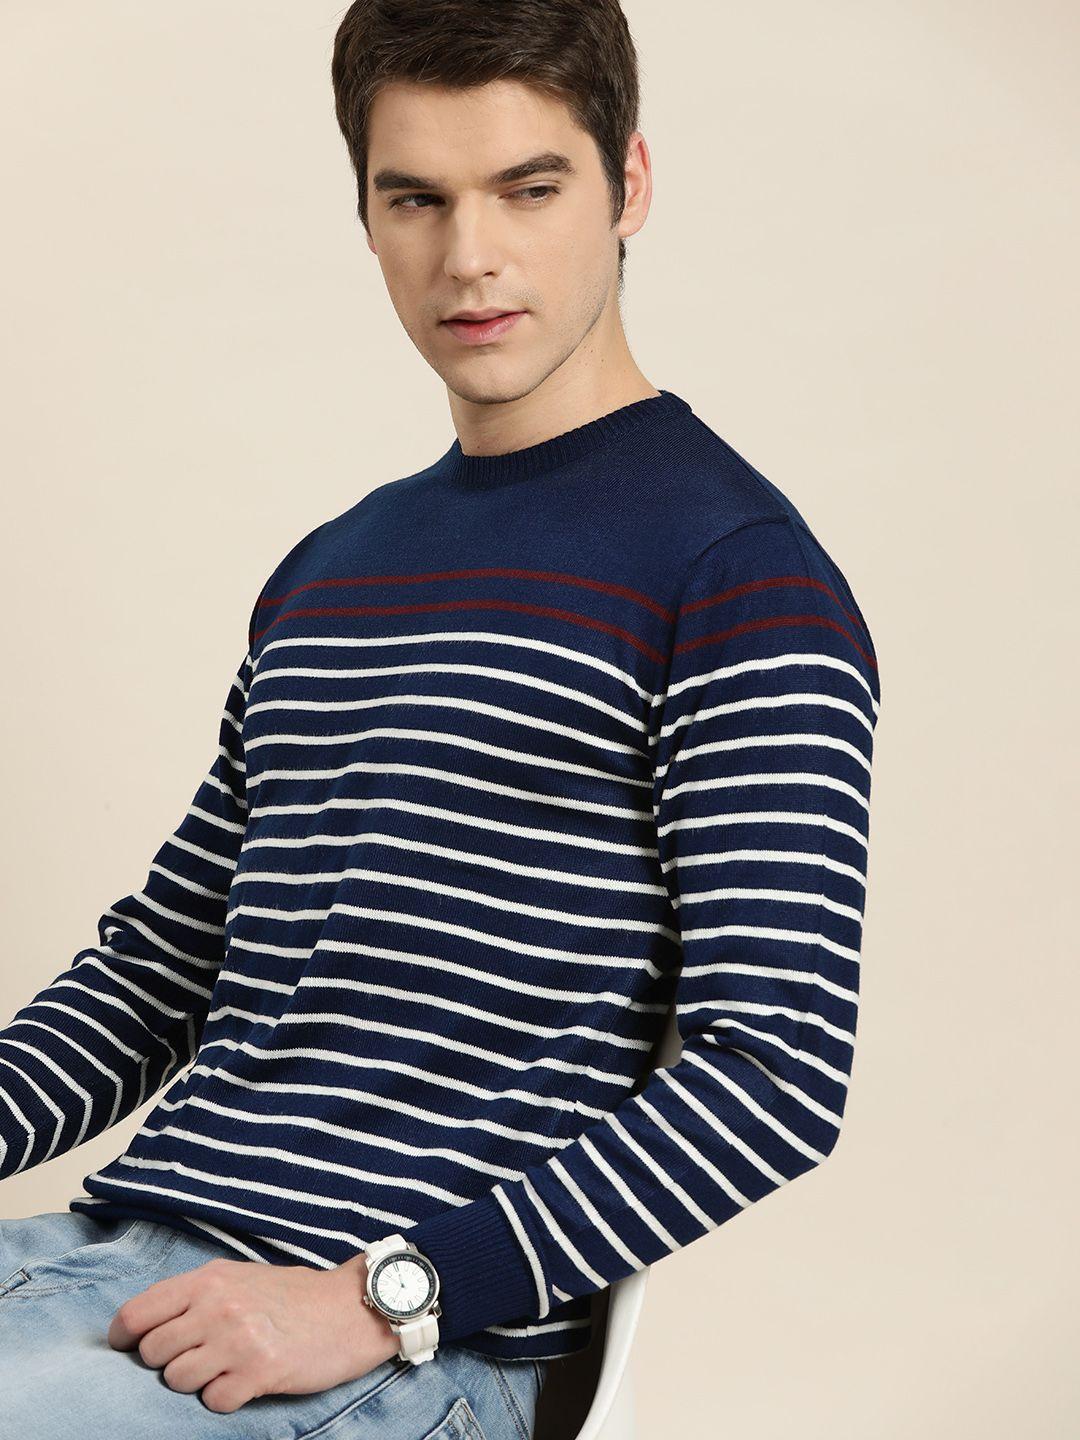 invictus men navy blue & white striped acrylic pullover